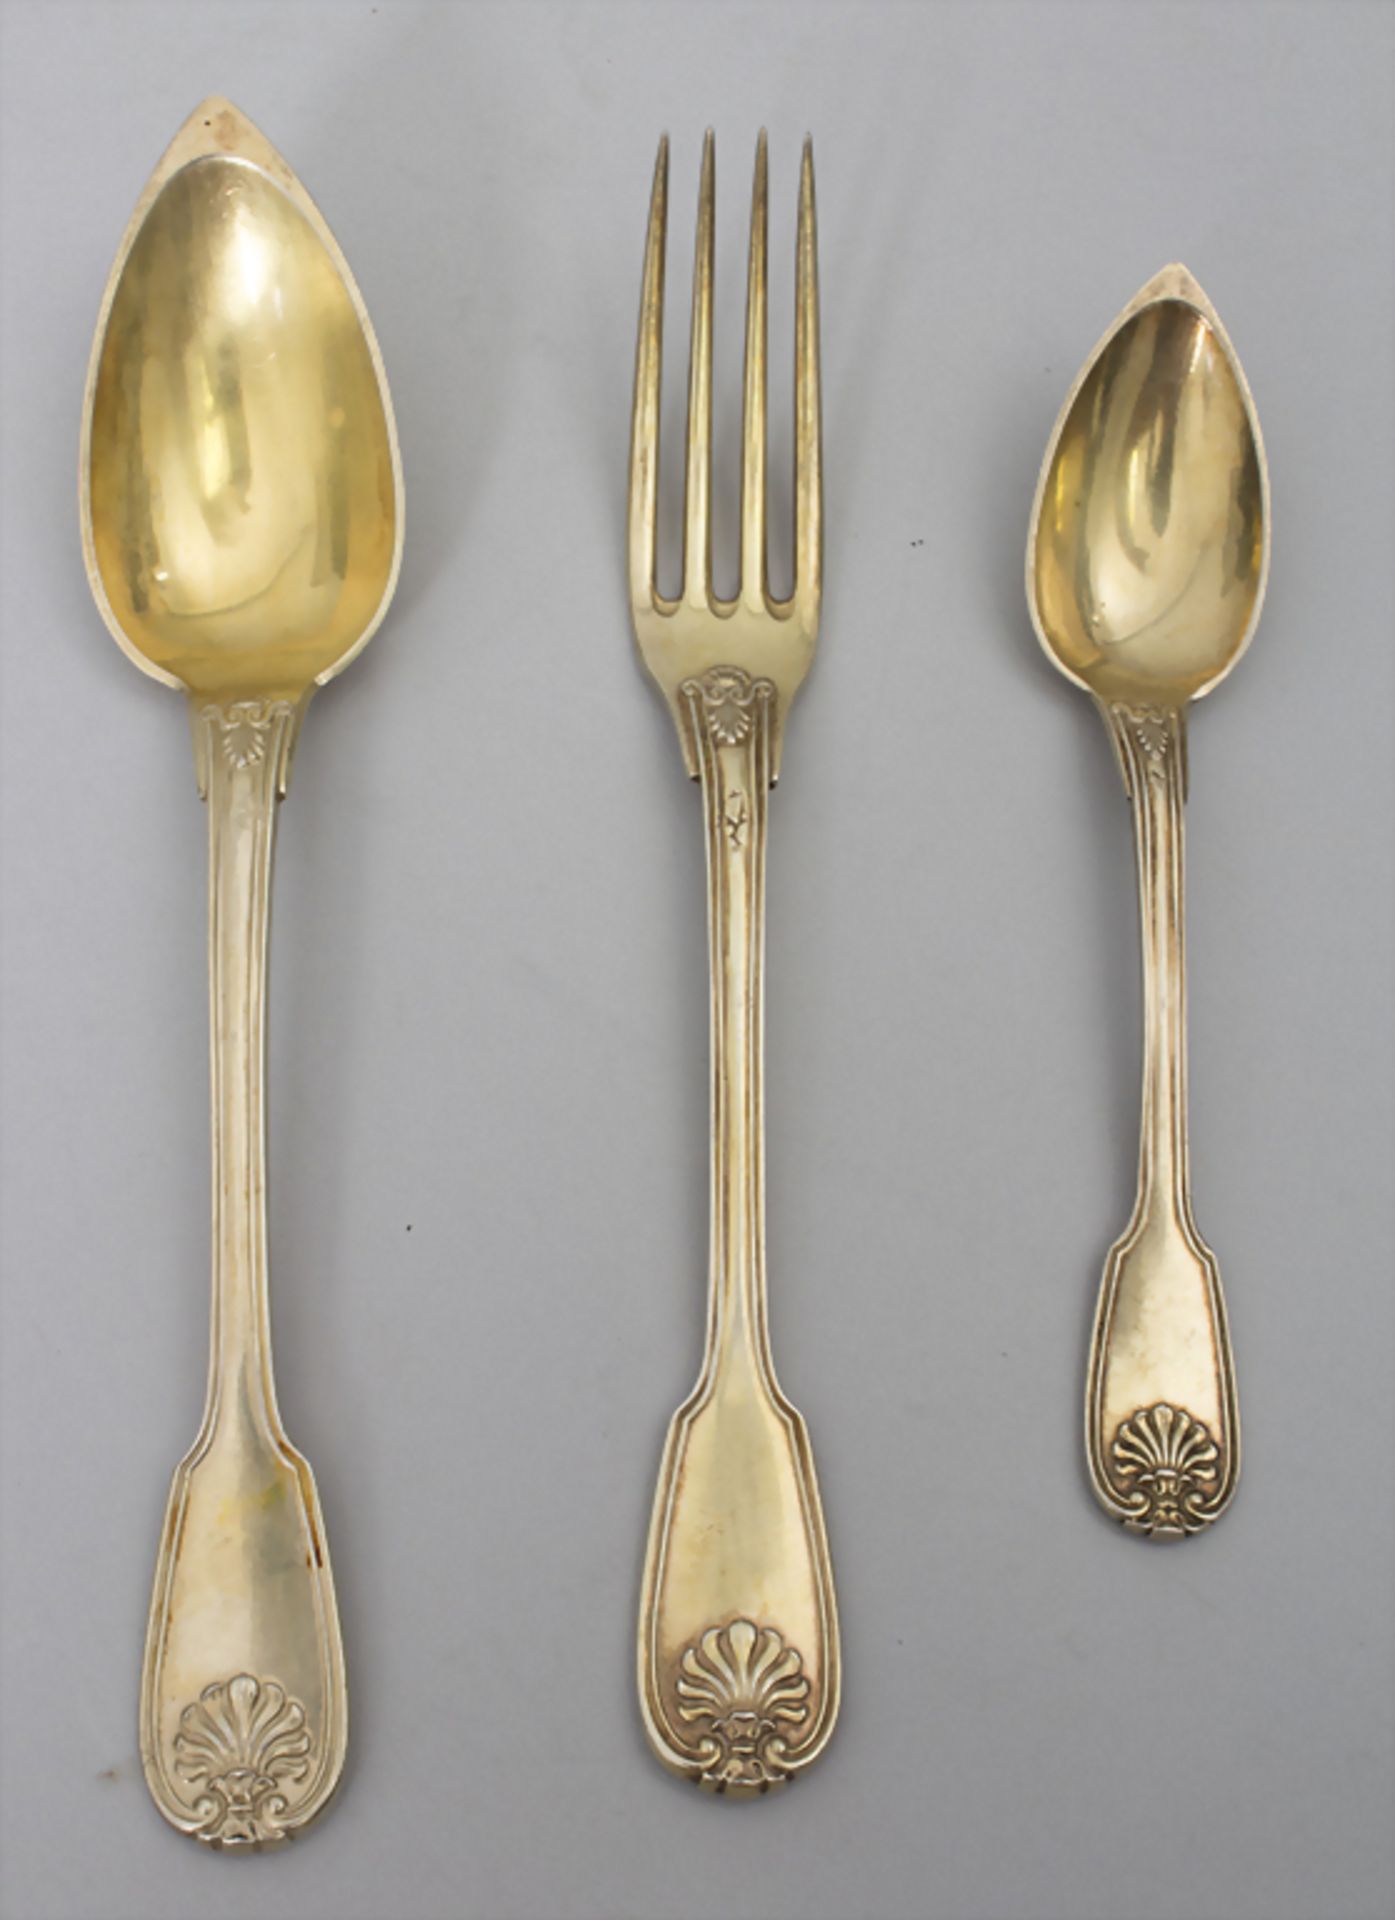 36 tlg. Silberbesteck / A 36-piece set of silver cutlery, Charles Salomon Mahler, Paris, 1824-18 - Bild 2 aus 15